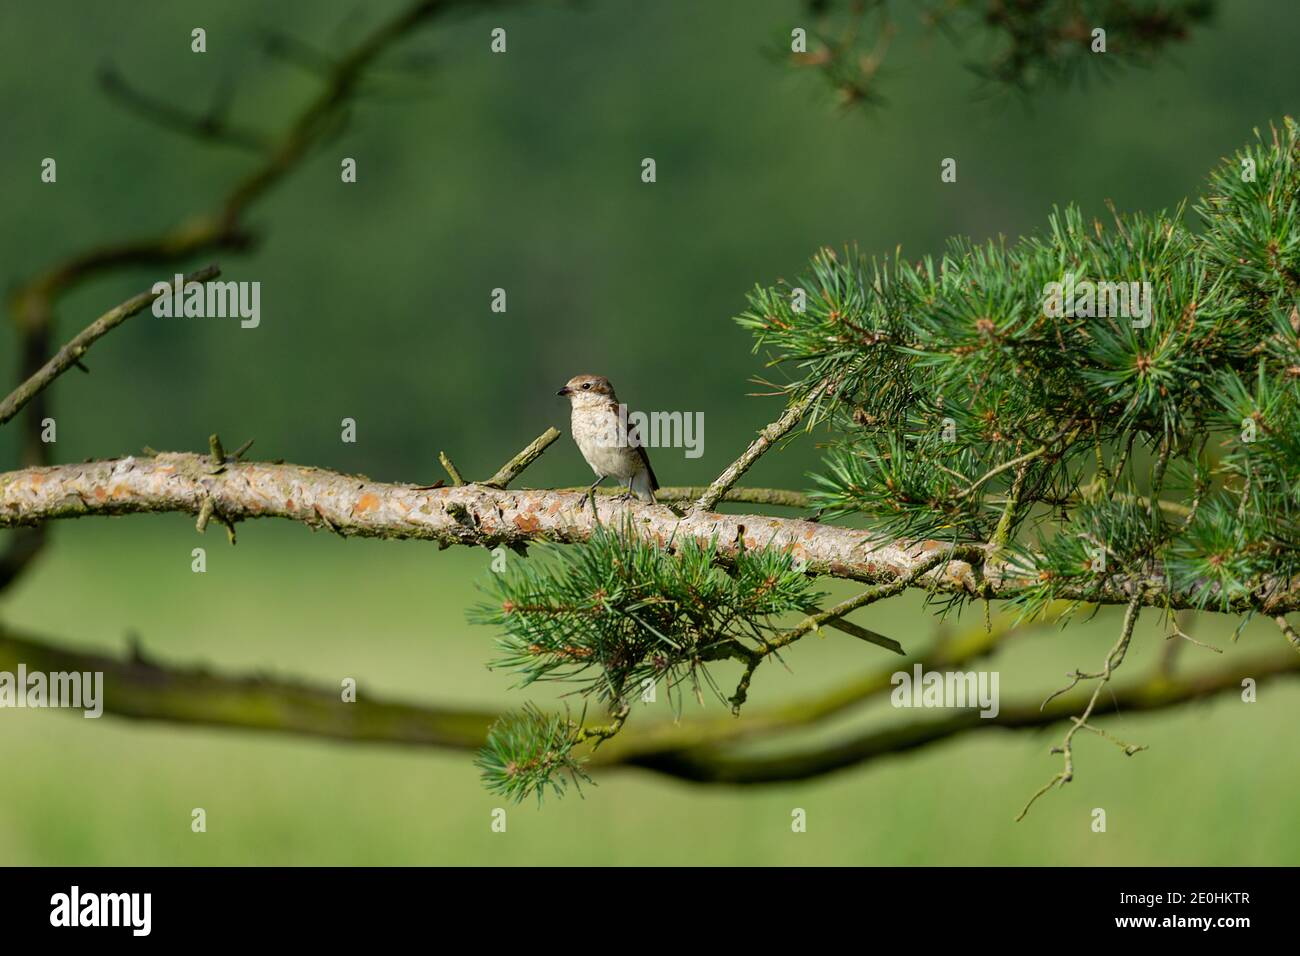 Small bird on spruce branch Stock Photo